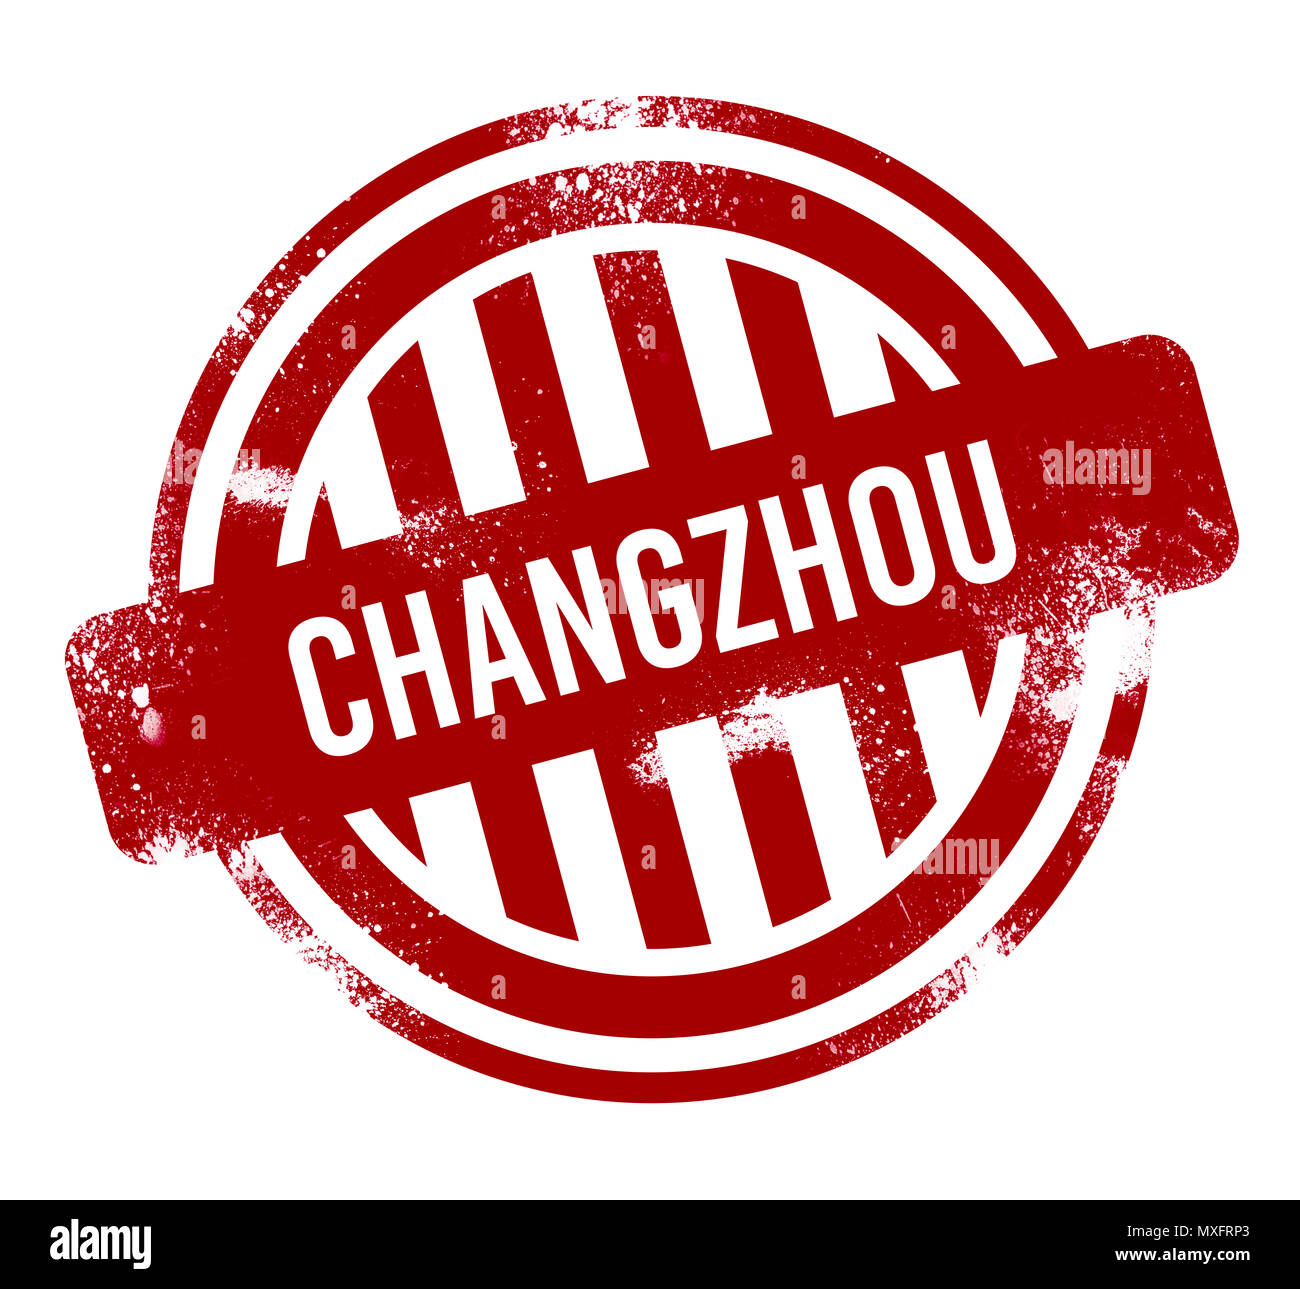 Changzhou - Red grunge button, stamp Stock Photo